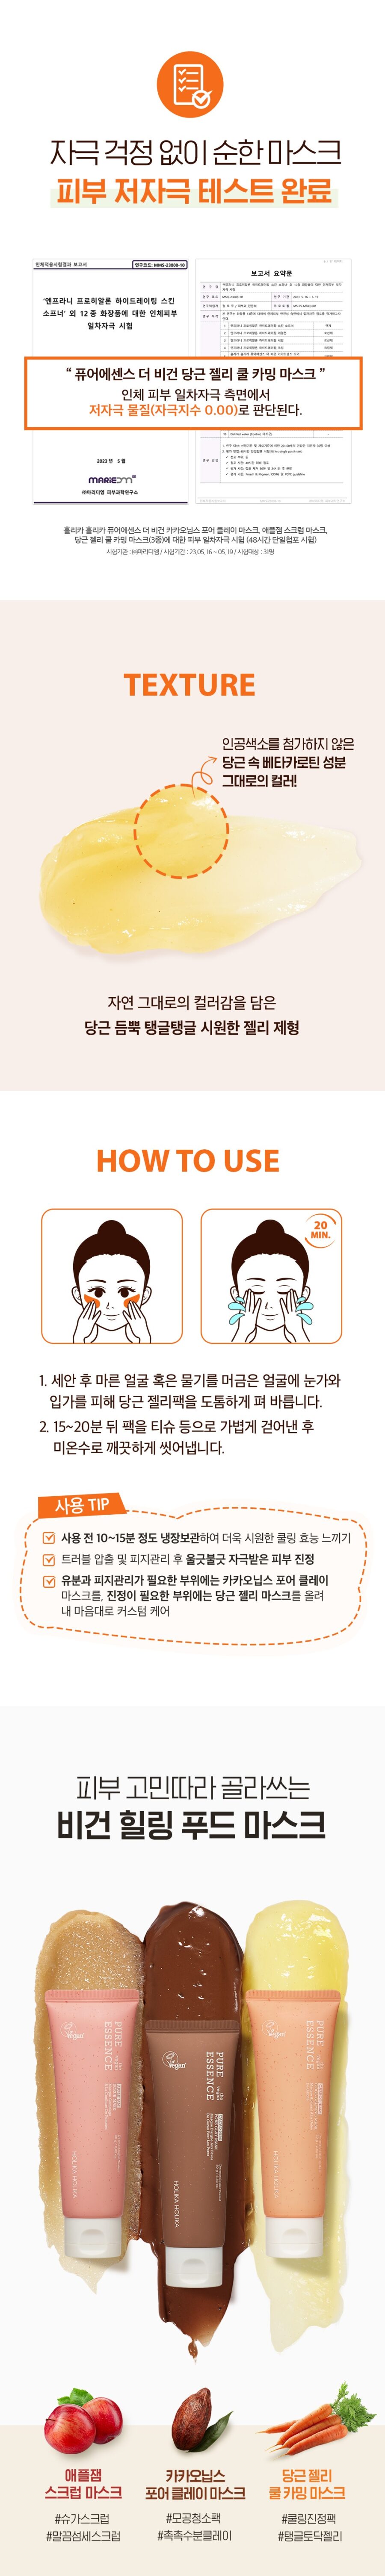 Holika Holika Pure Essence The Vegan Mask korean skincare product online shop malaysia china india4